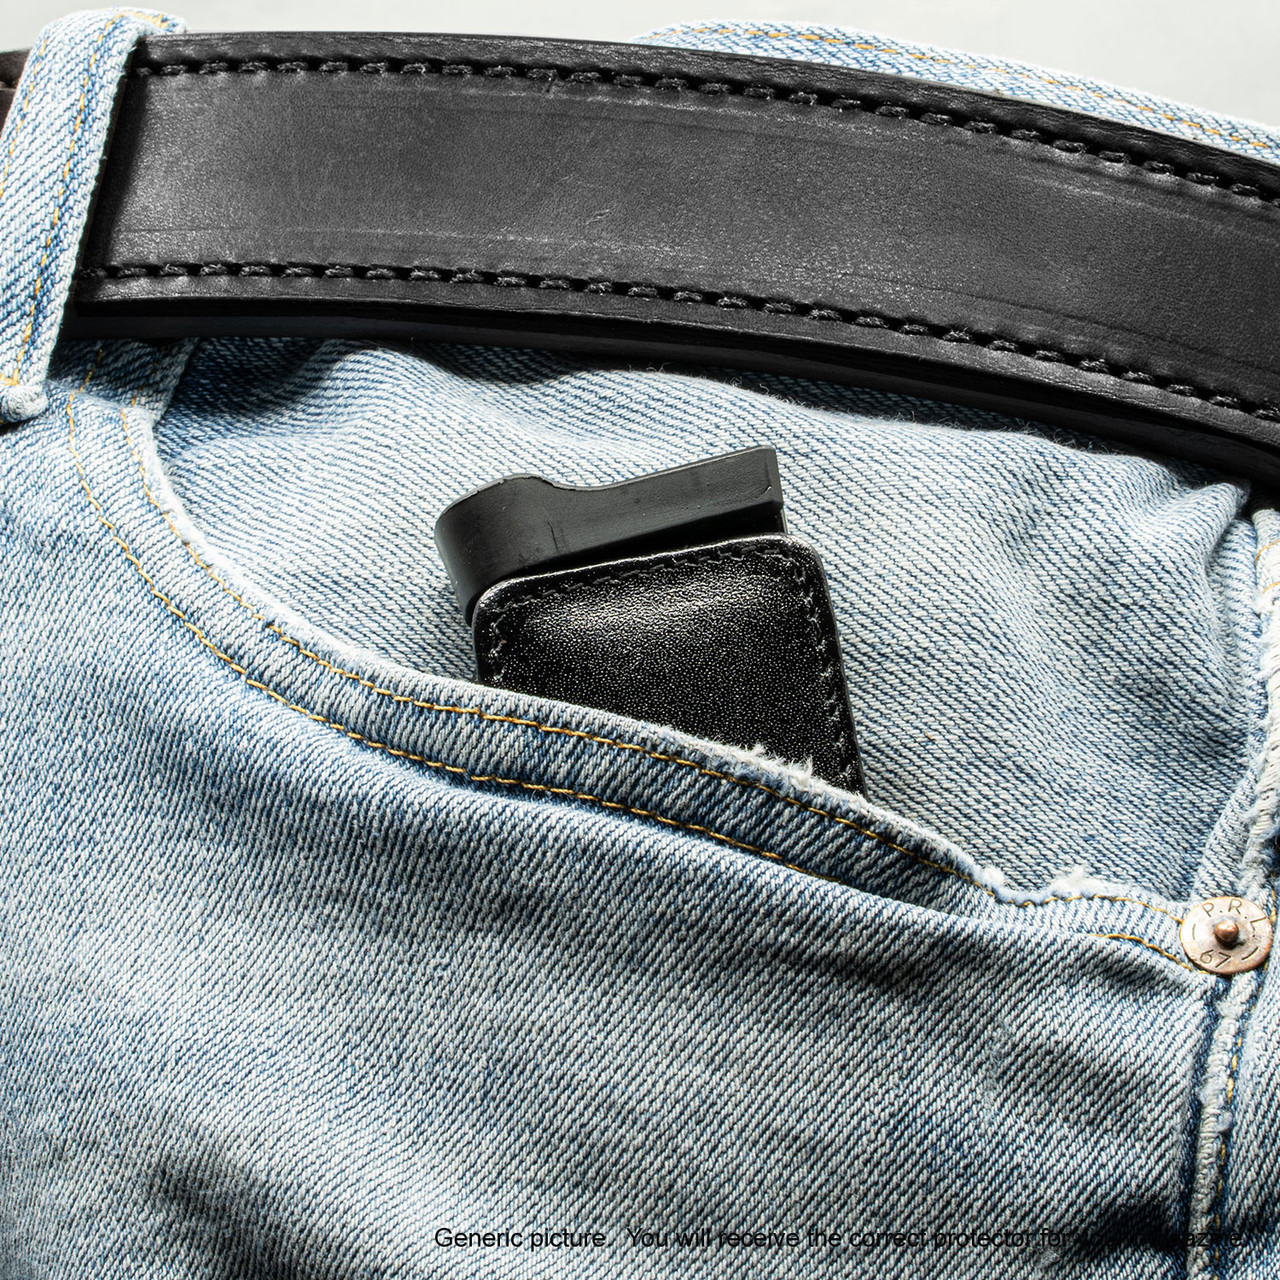 CZ 75 P07 Black Leather Magazine Pocket Protector